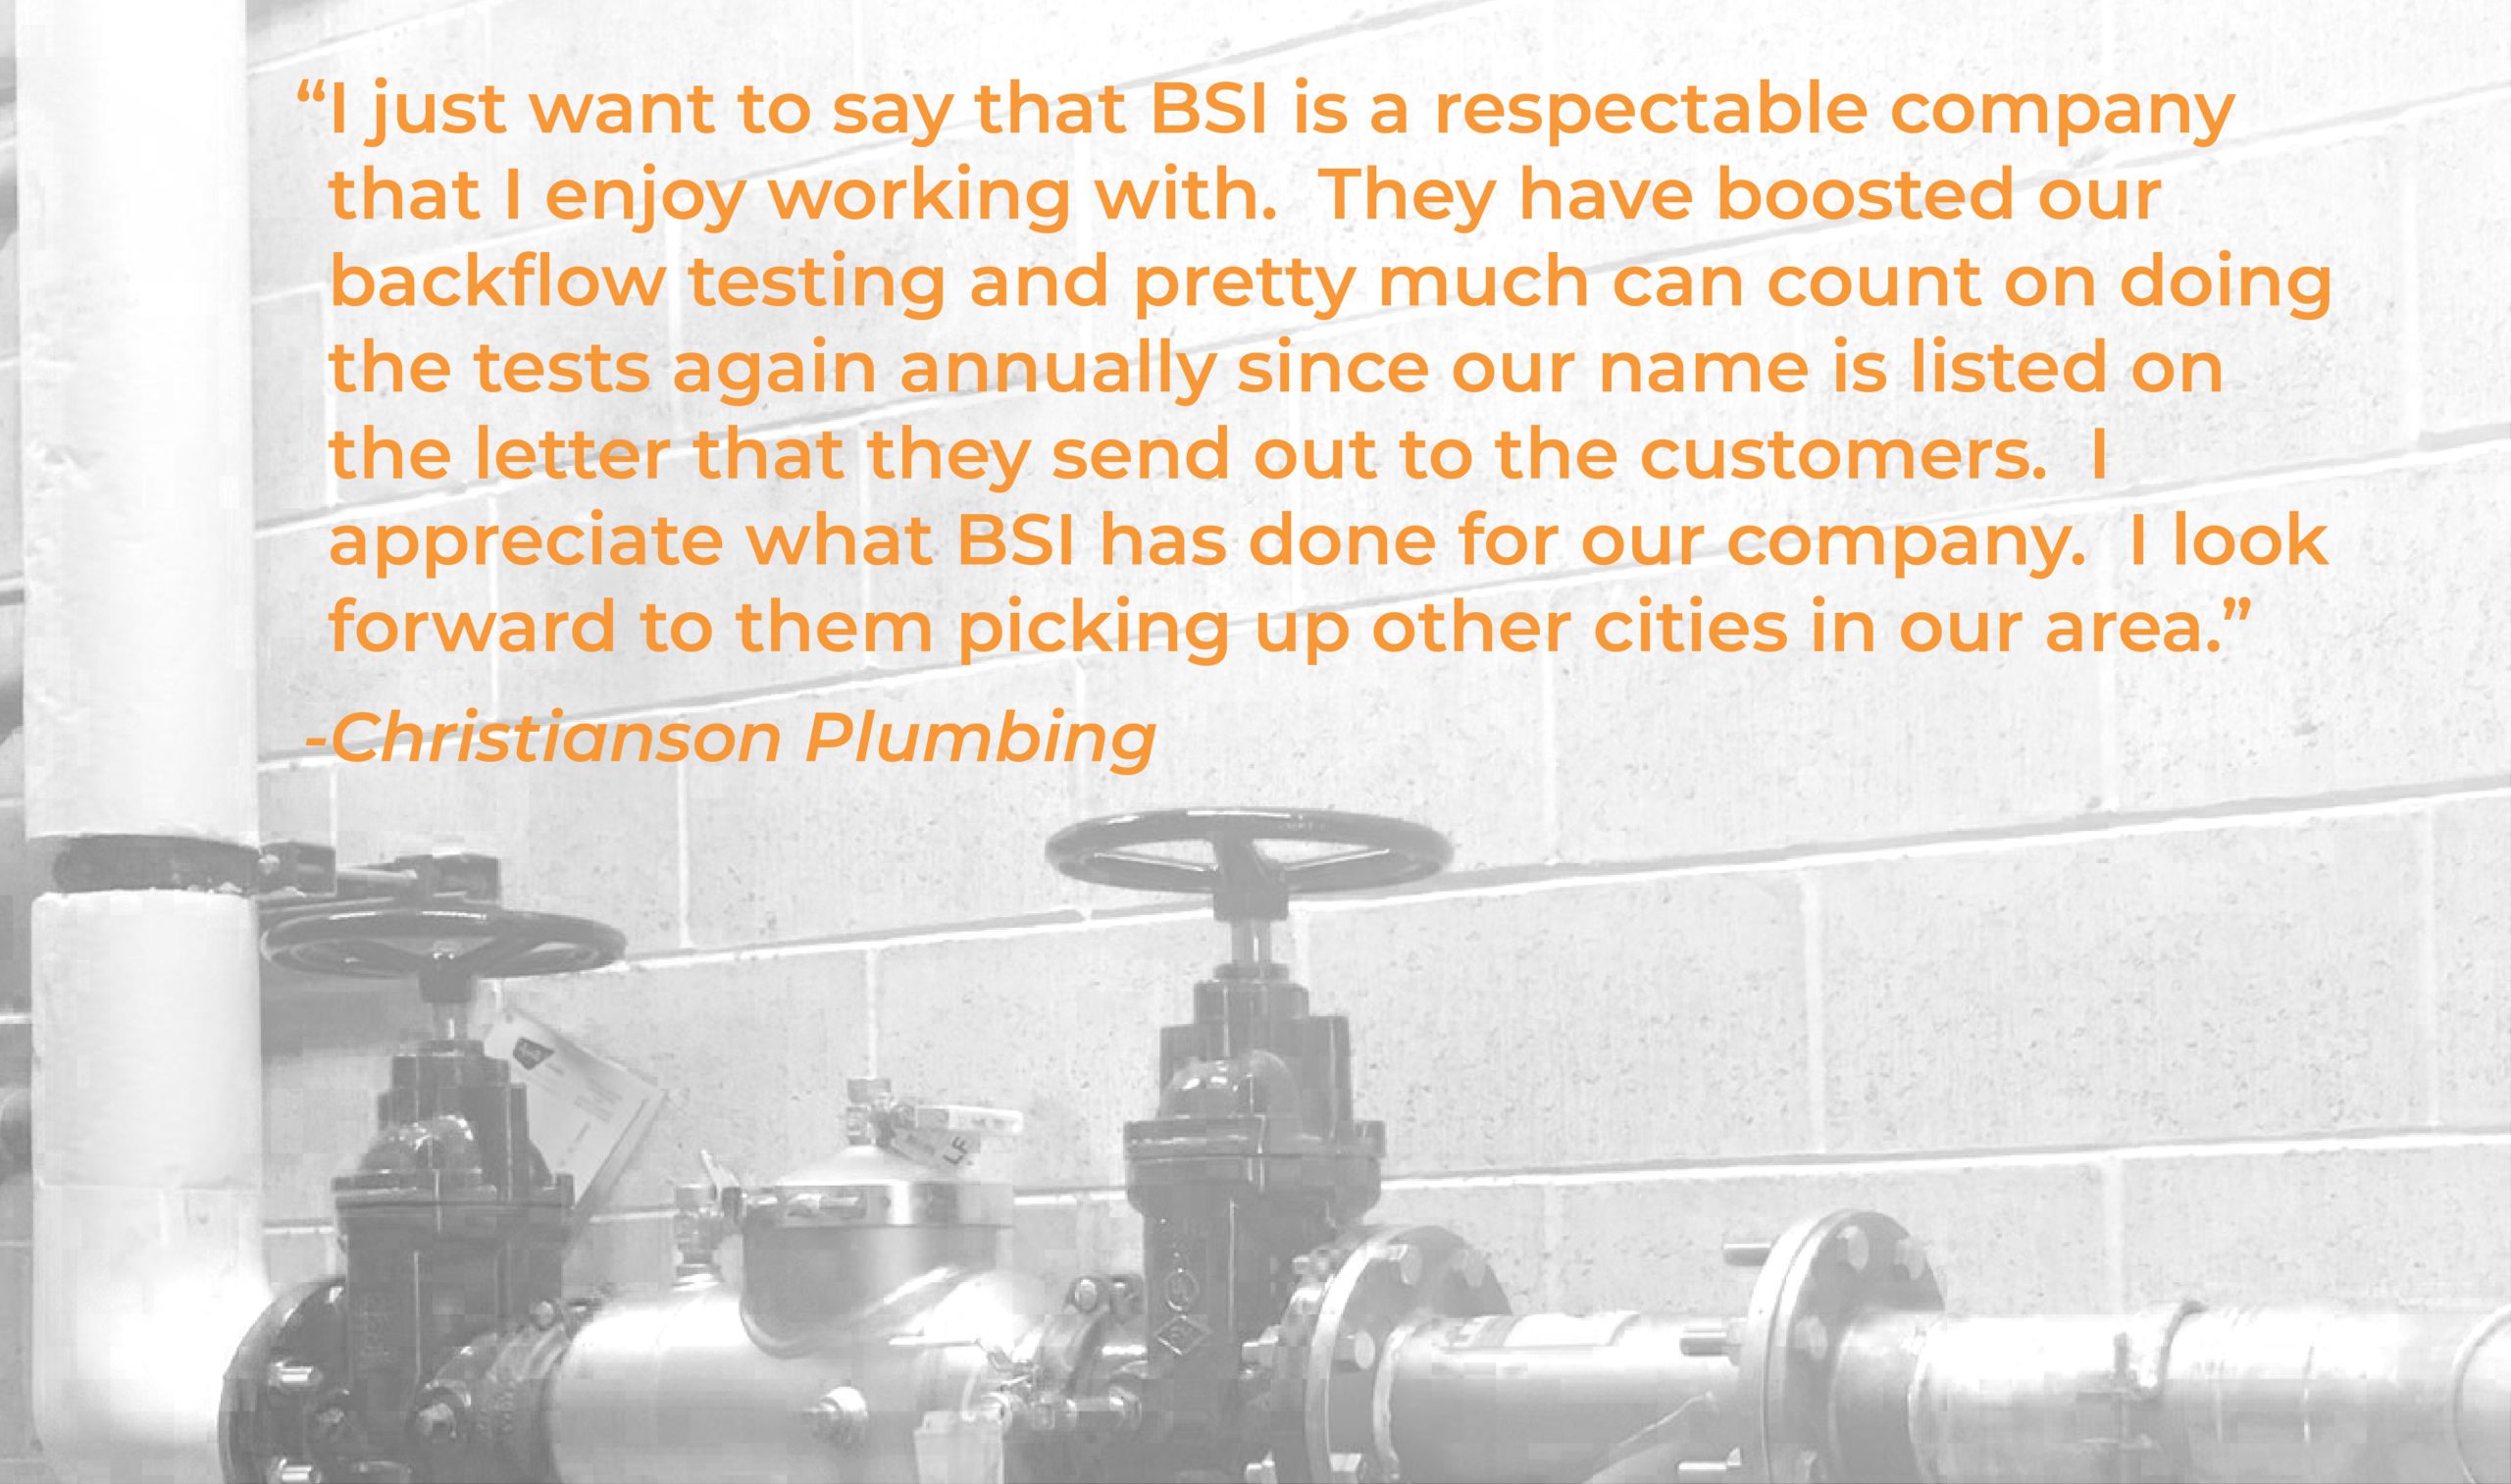 Plumbing company applauds BSI's service as respectable